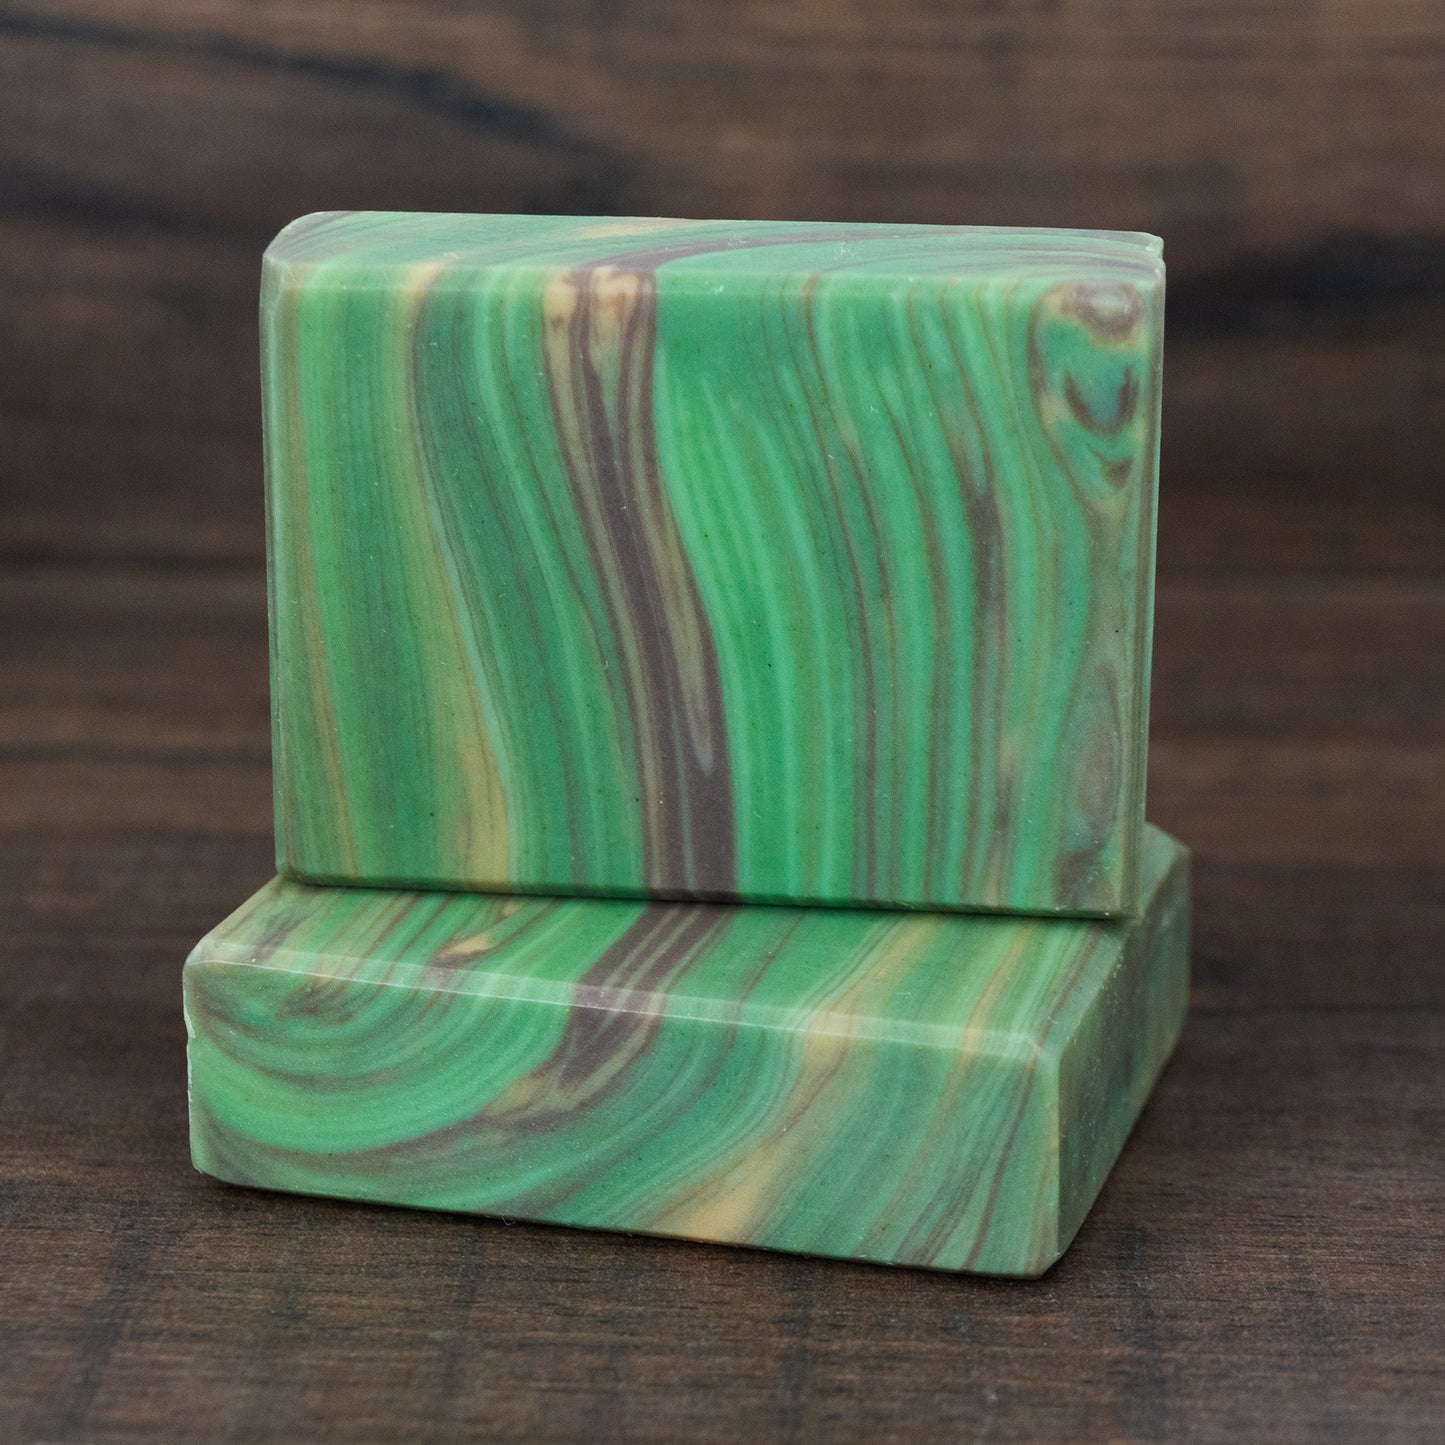 Giant Forest // Premium-Fragrance Soap